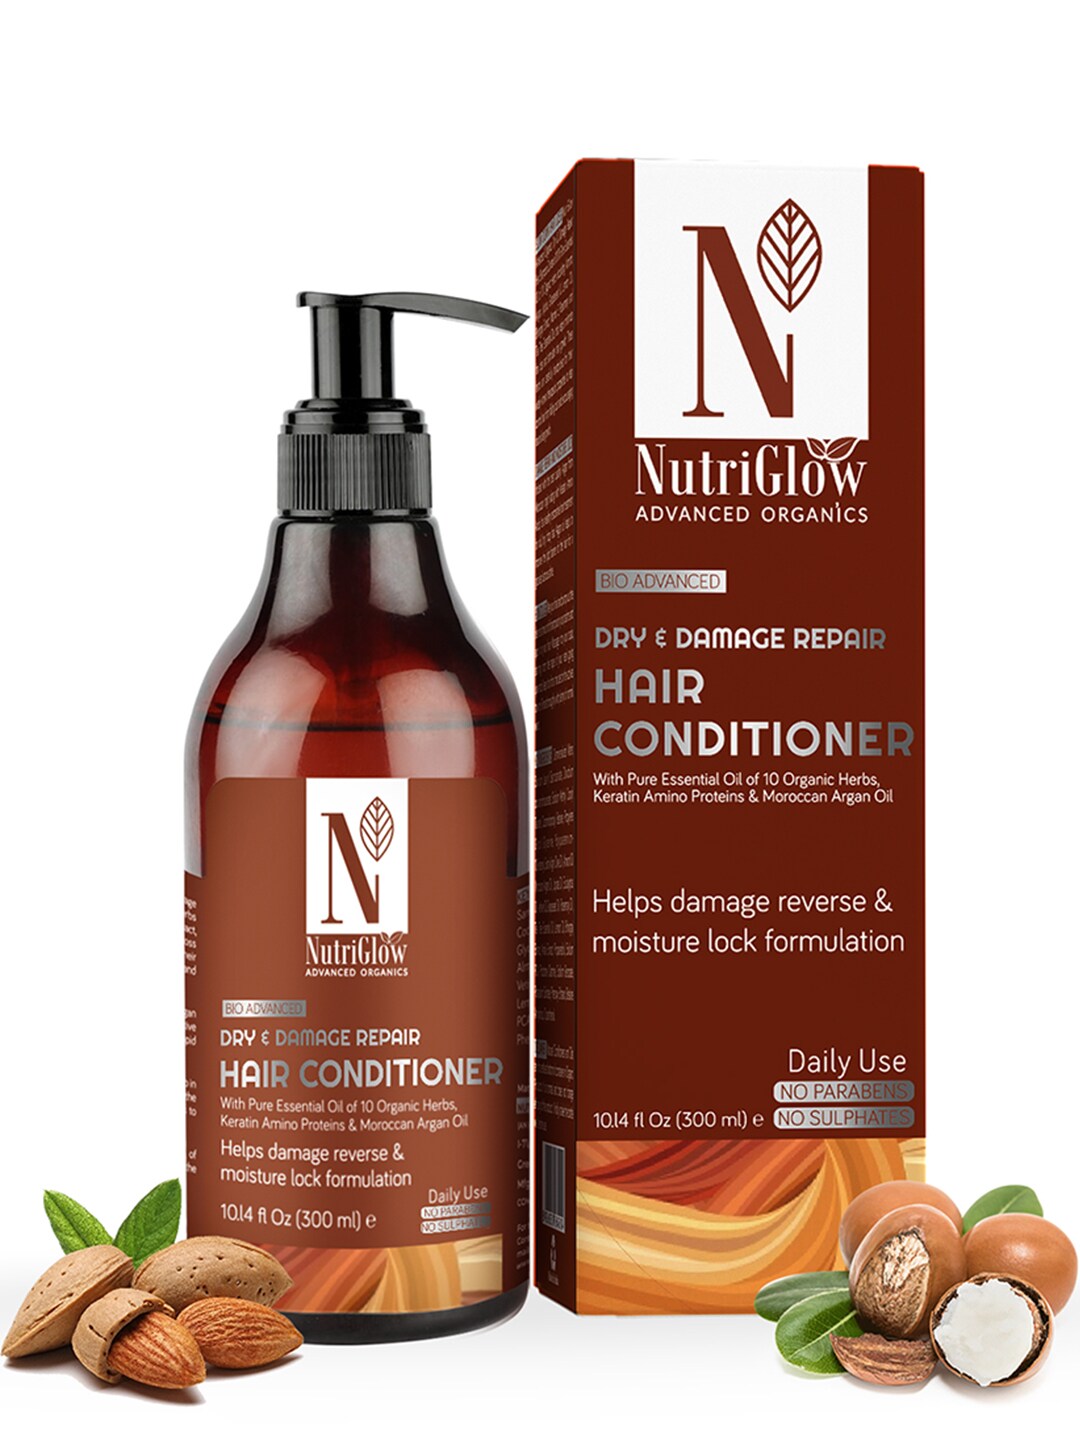 NutriGlow Advanced Organics Bio Daily Use Dry-damage Repair Hair Conditioner 300 ml Price in India